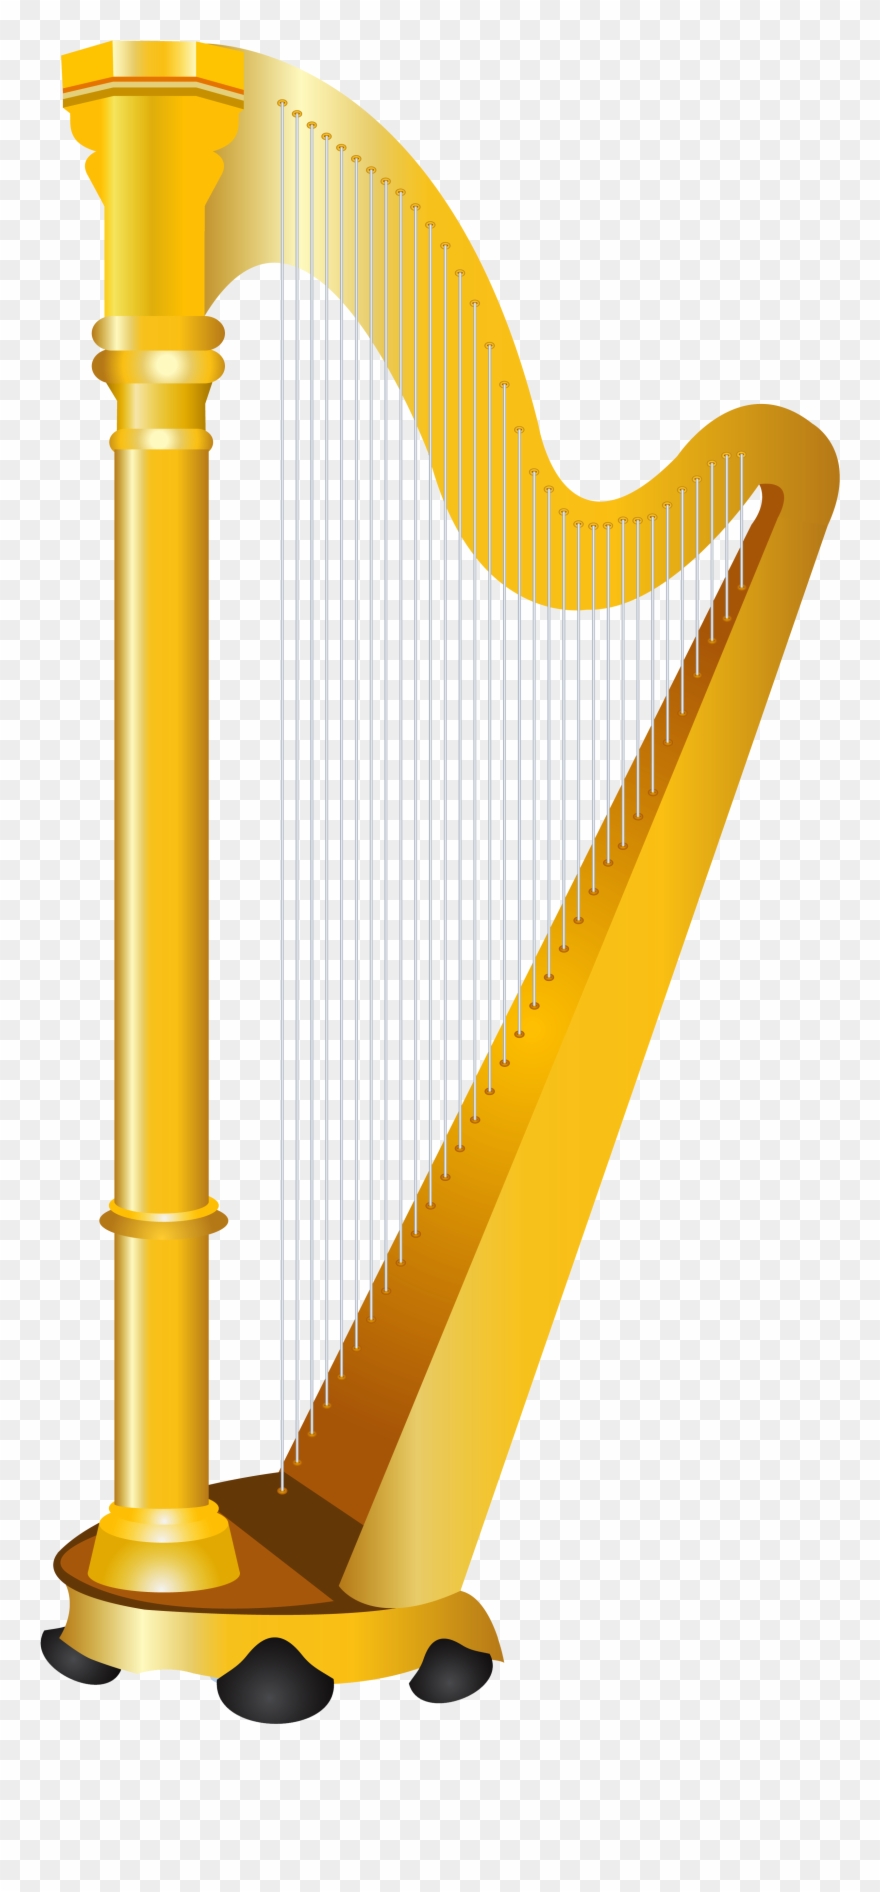 Harp cliparts harp.